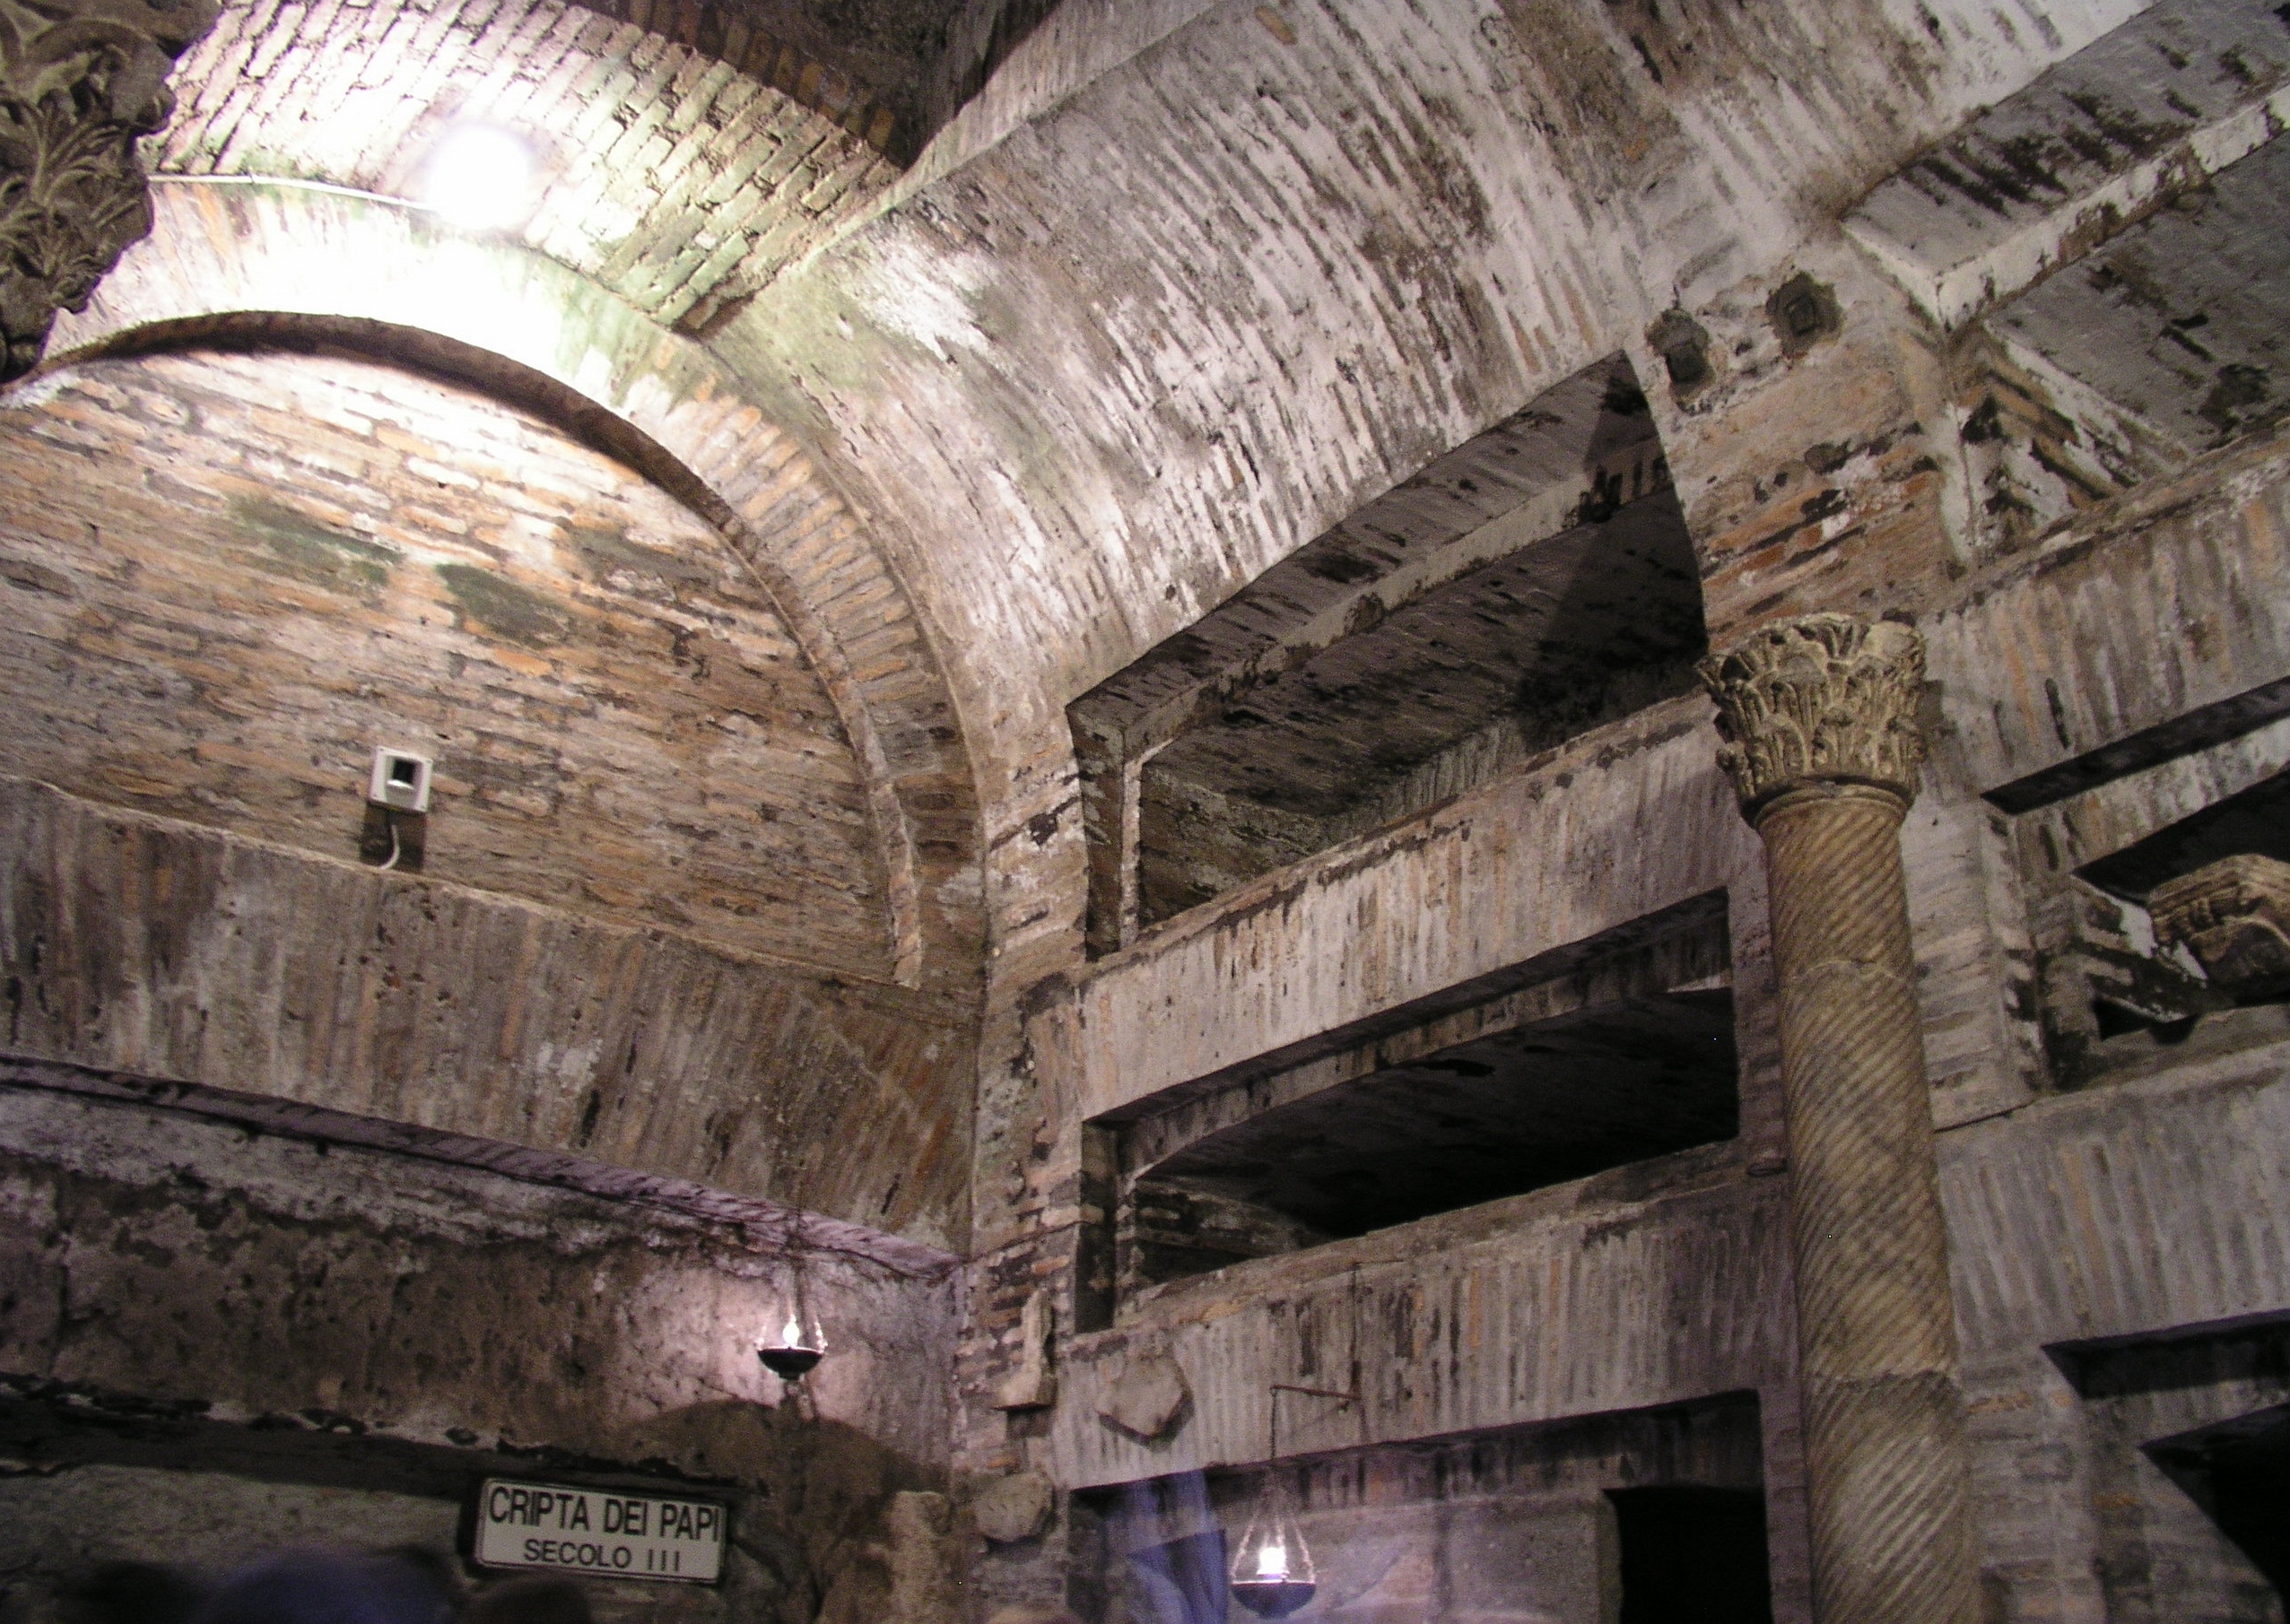 Private Tour of San Callisto Catacombs